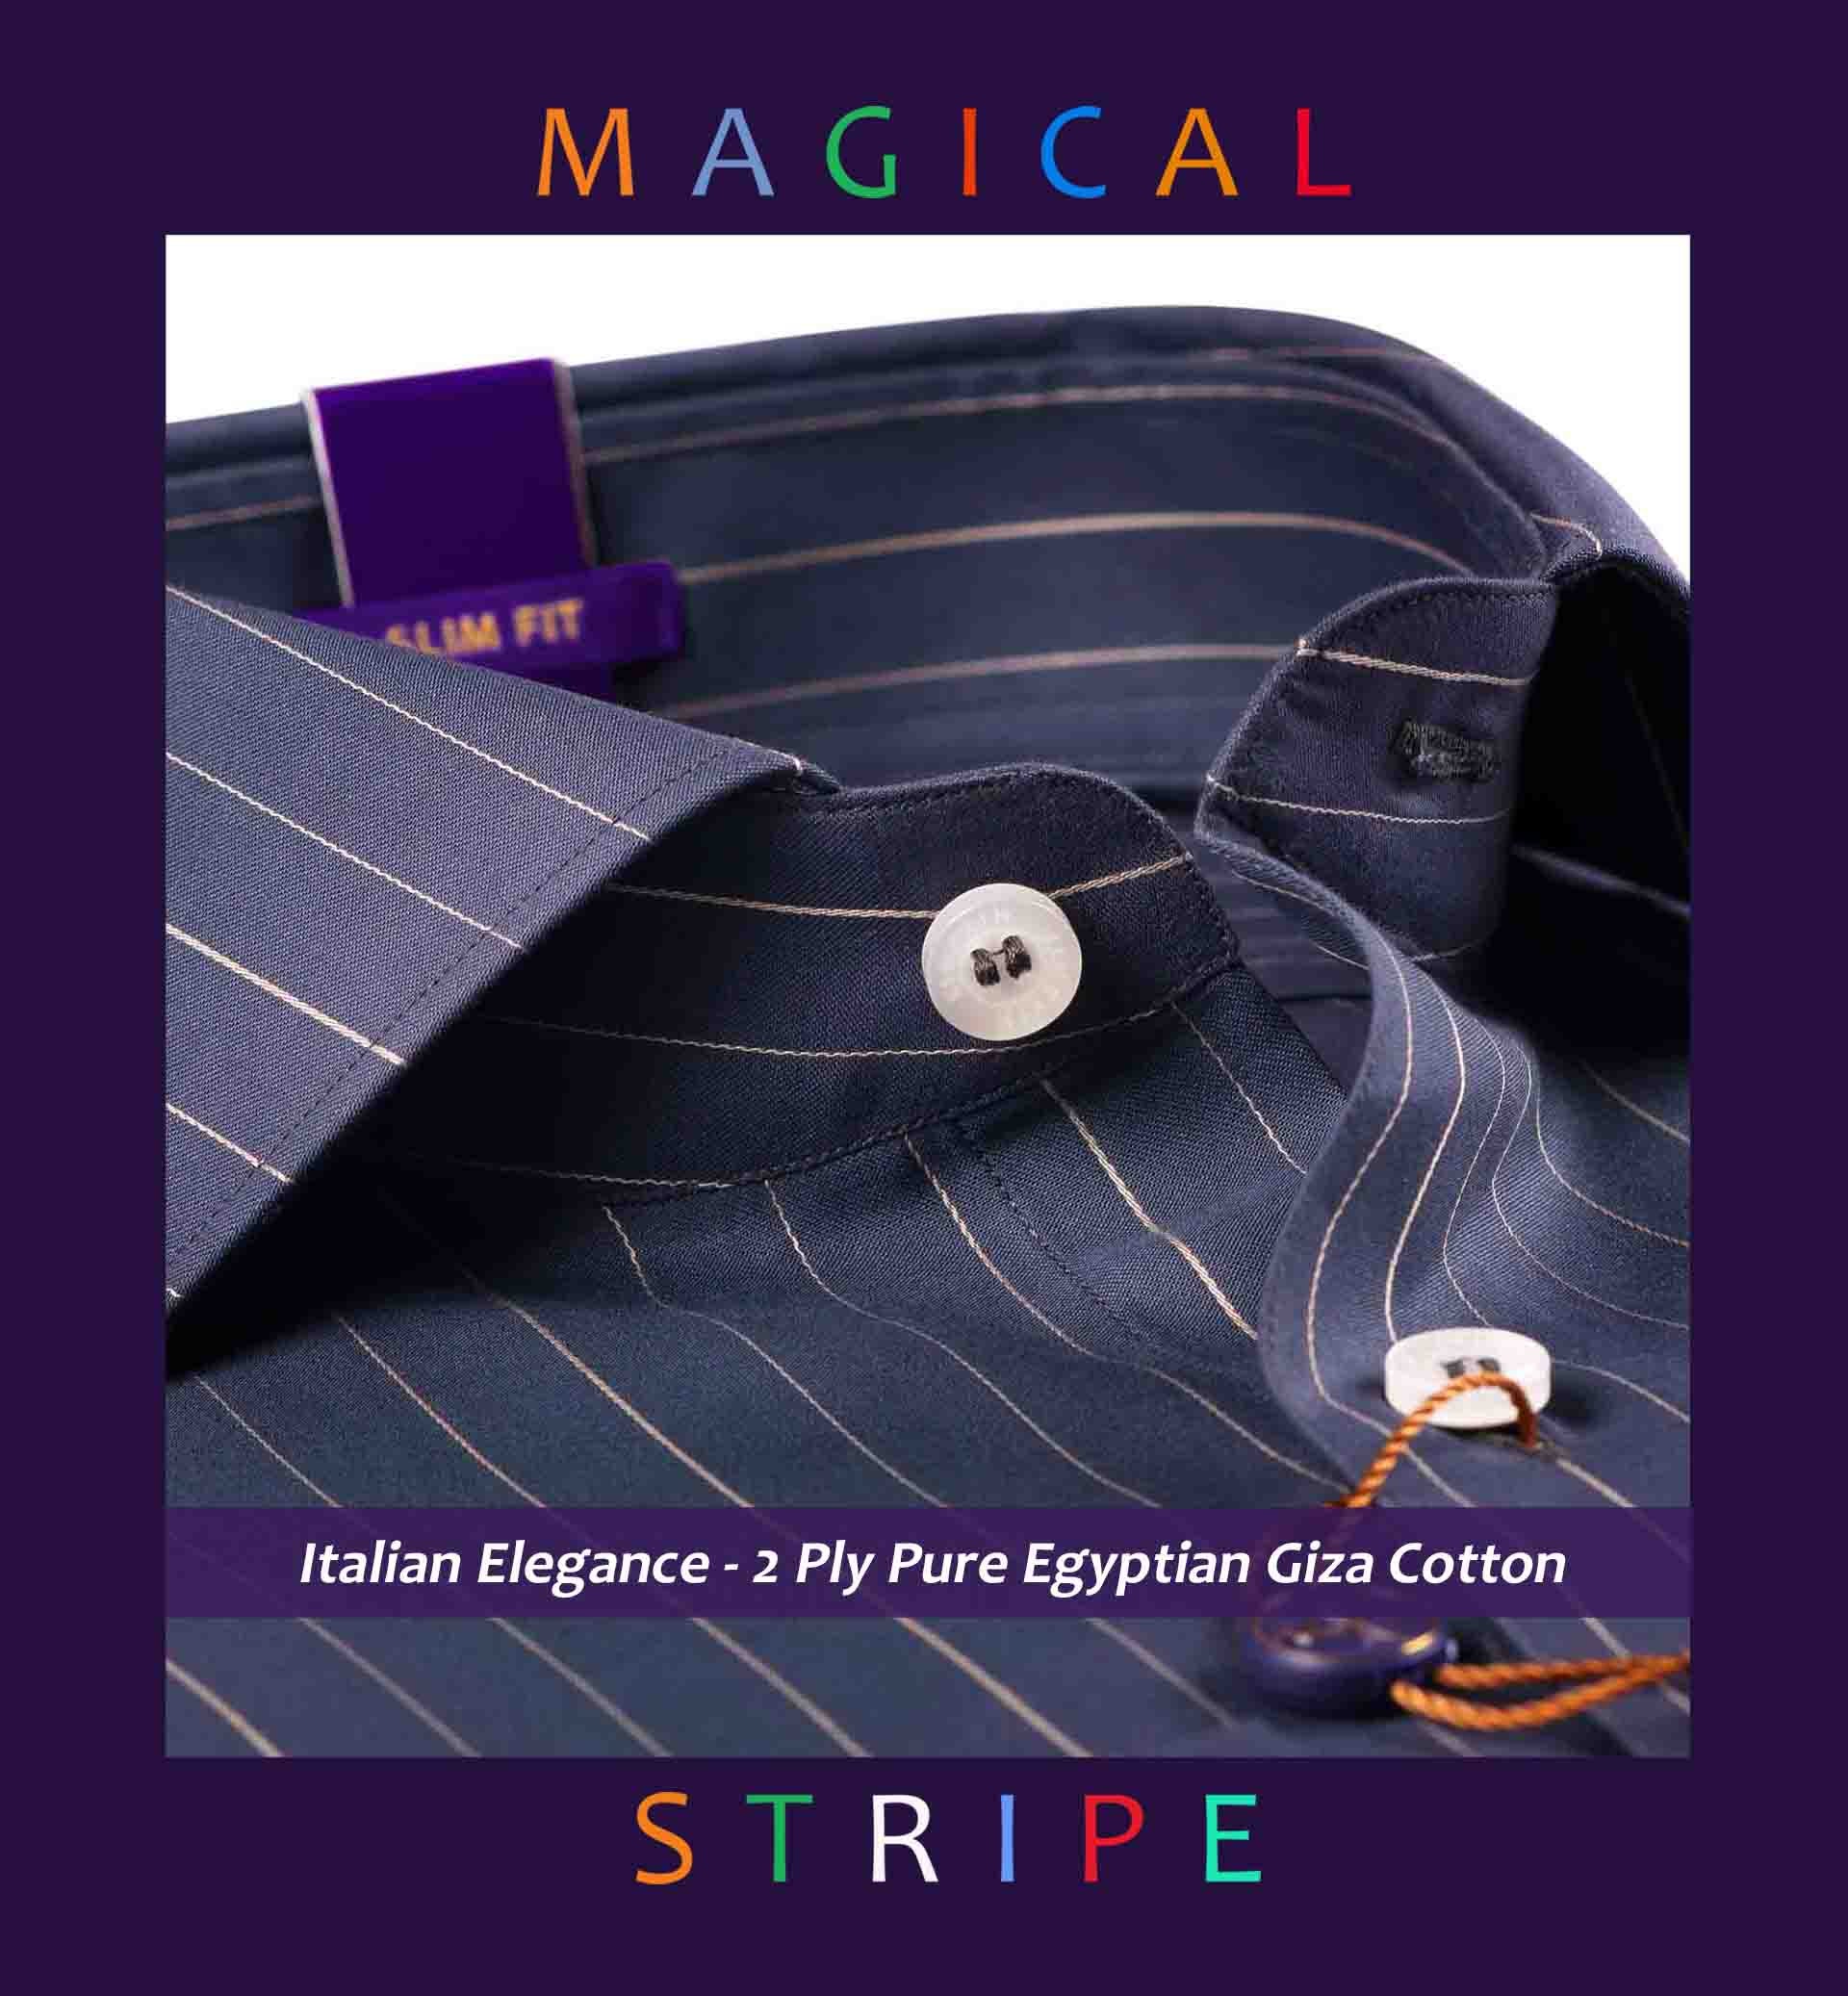 Slovenia- Anchor Grey & Beige Magical Stripe- 2 Ply Pure Egyptian Giza Cotton